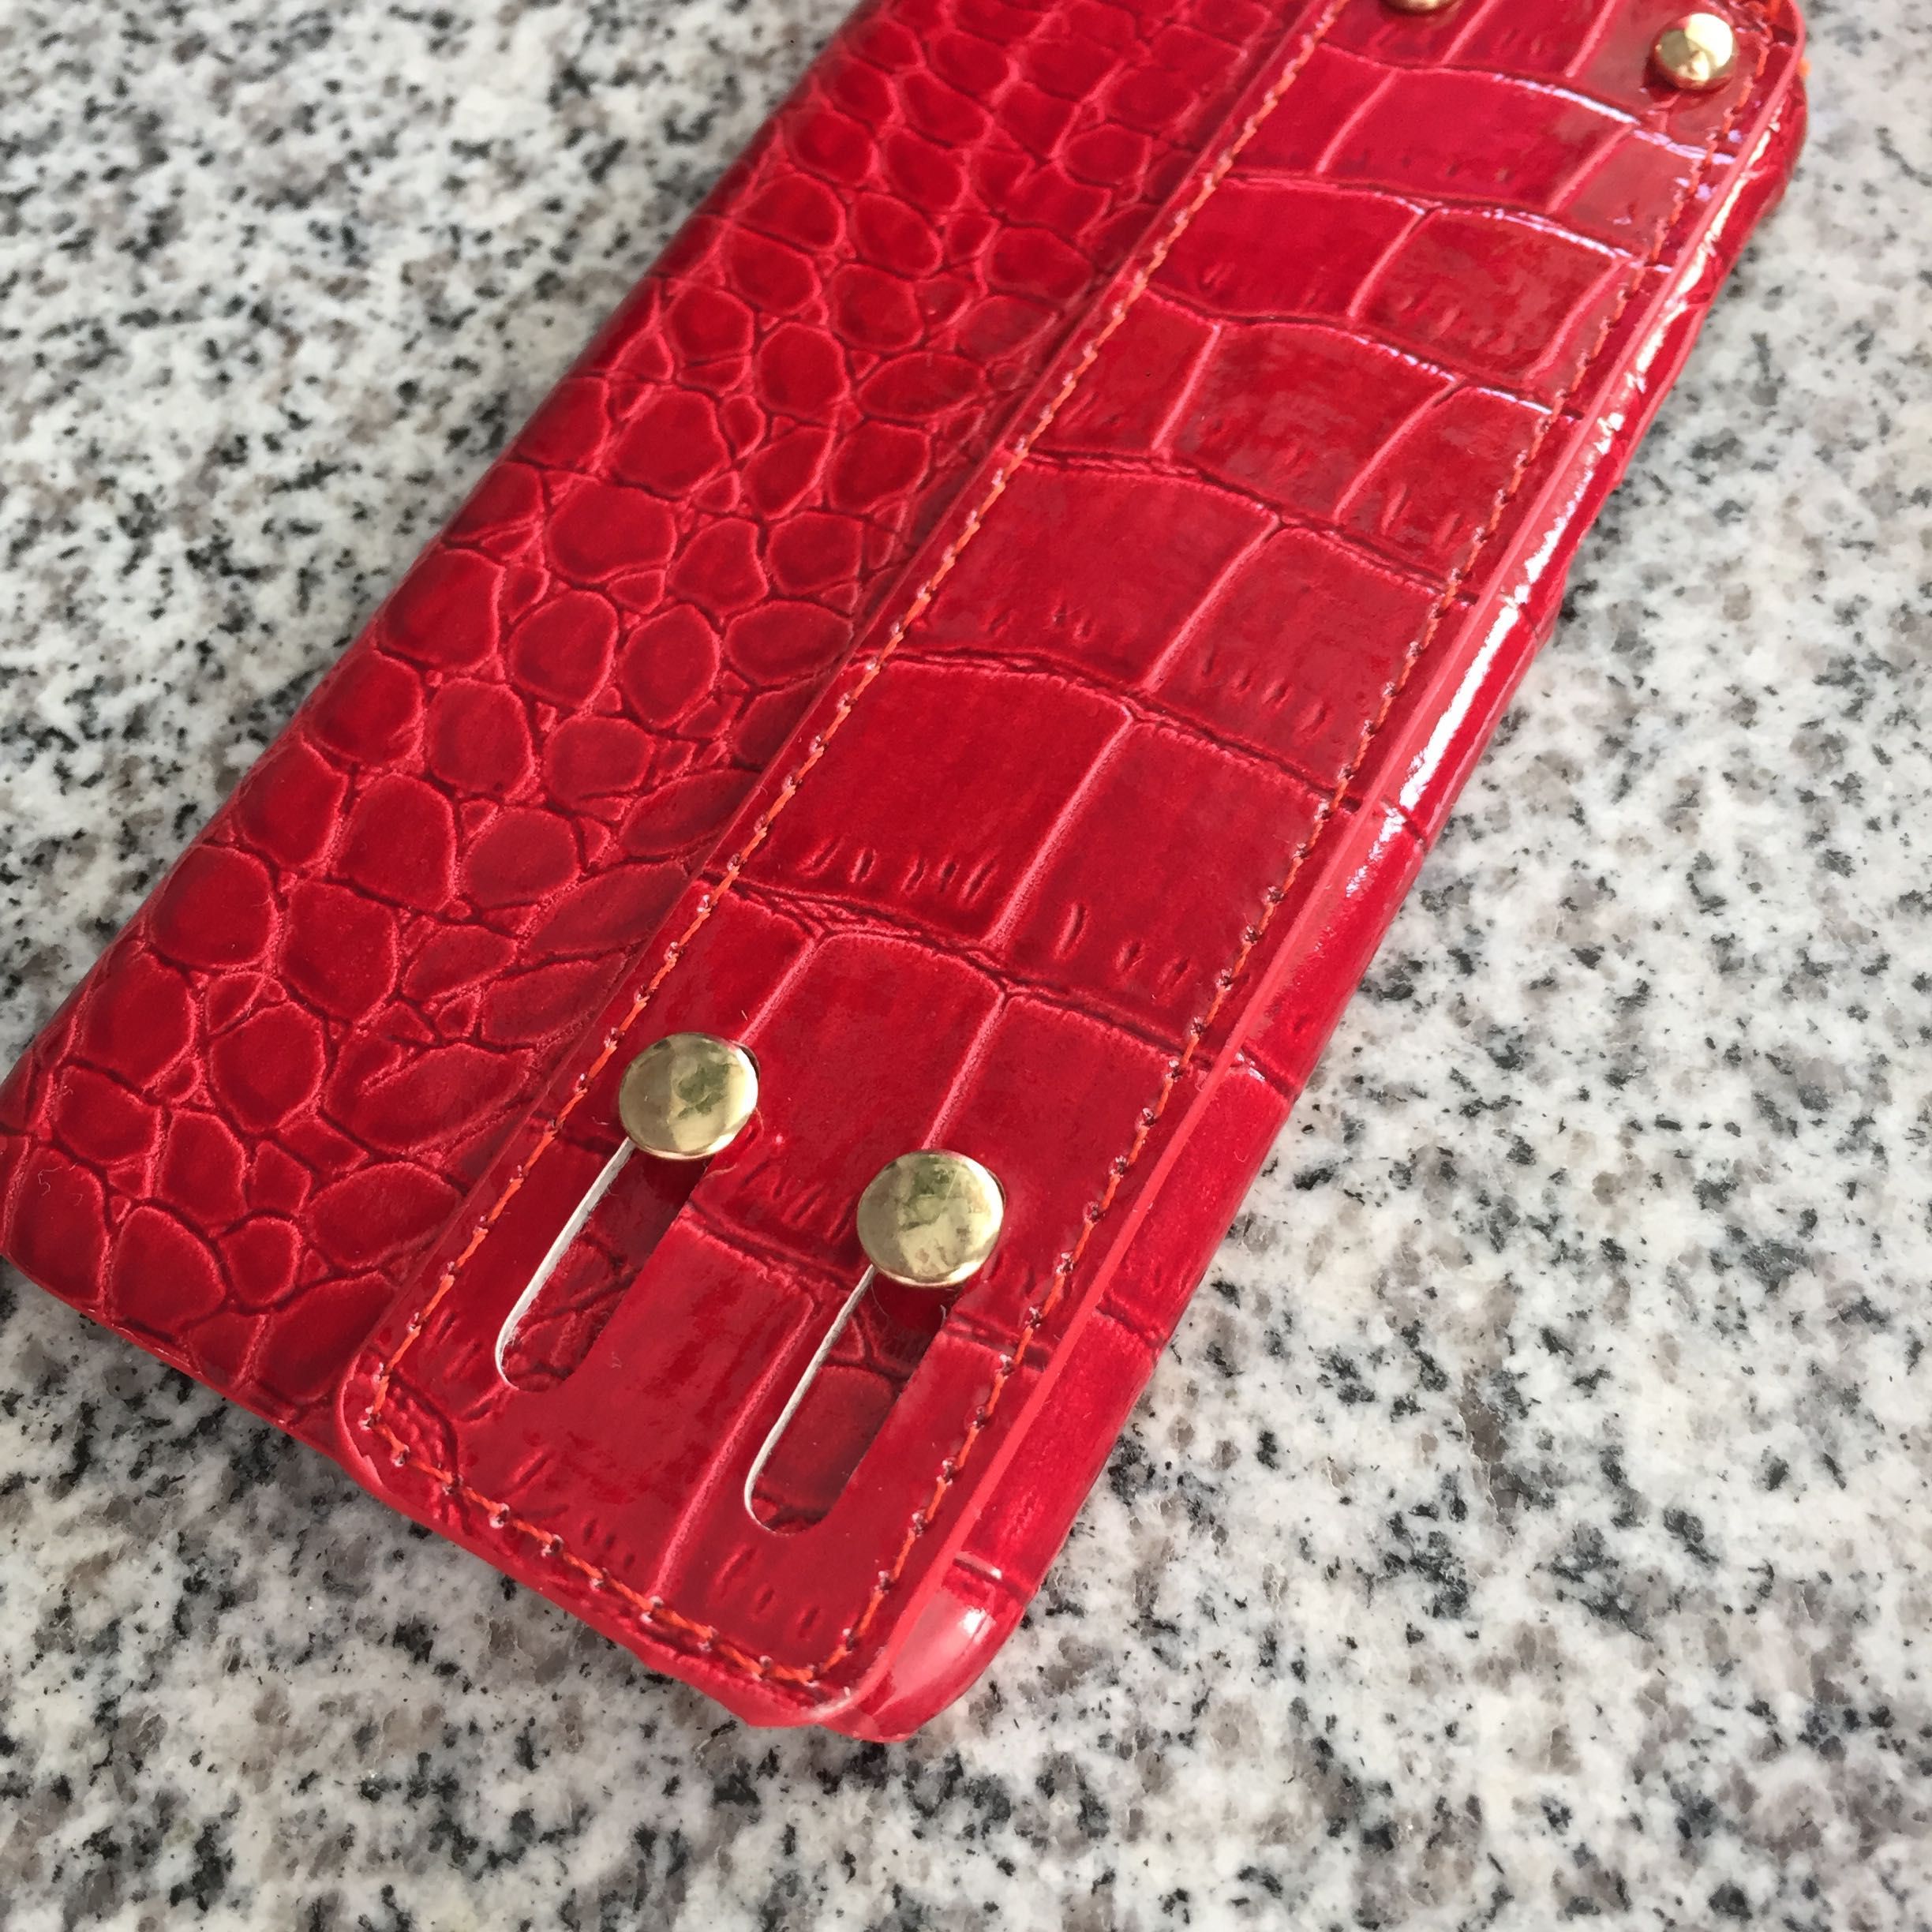 Husa rosie piele crocodil cu suport pt mana iPhone 6 6S